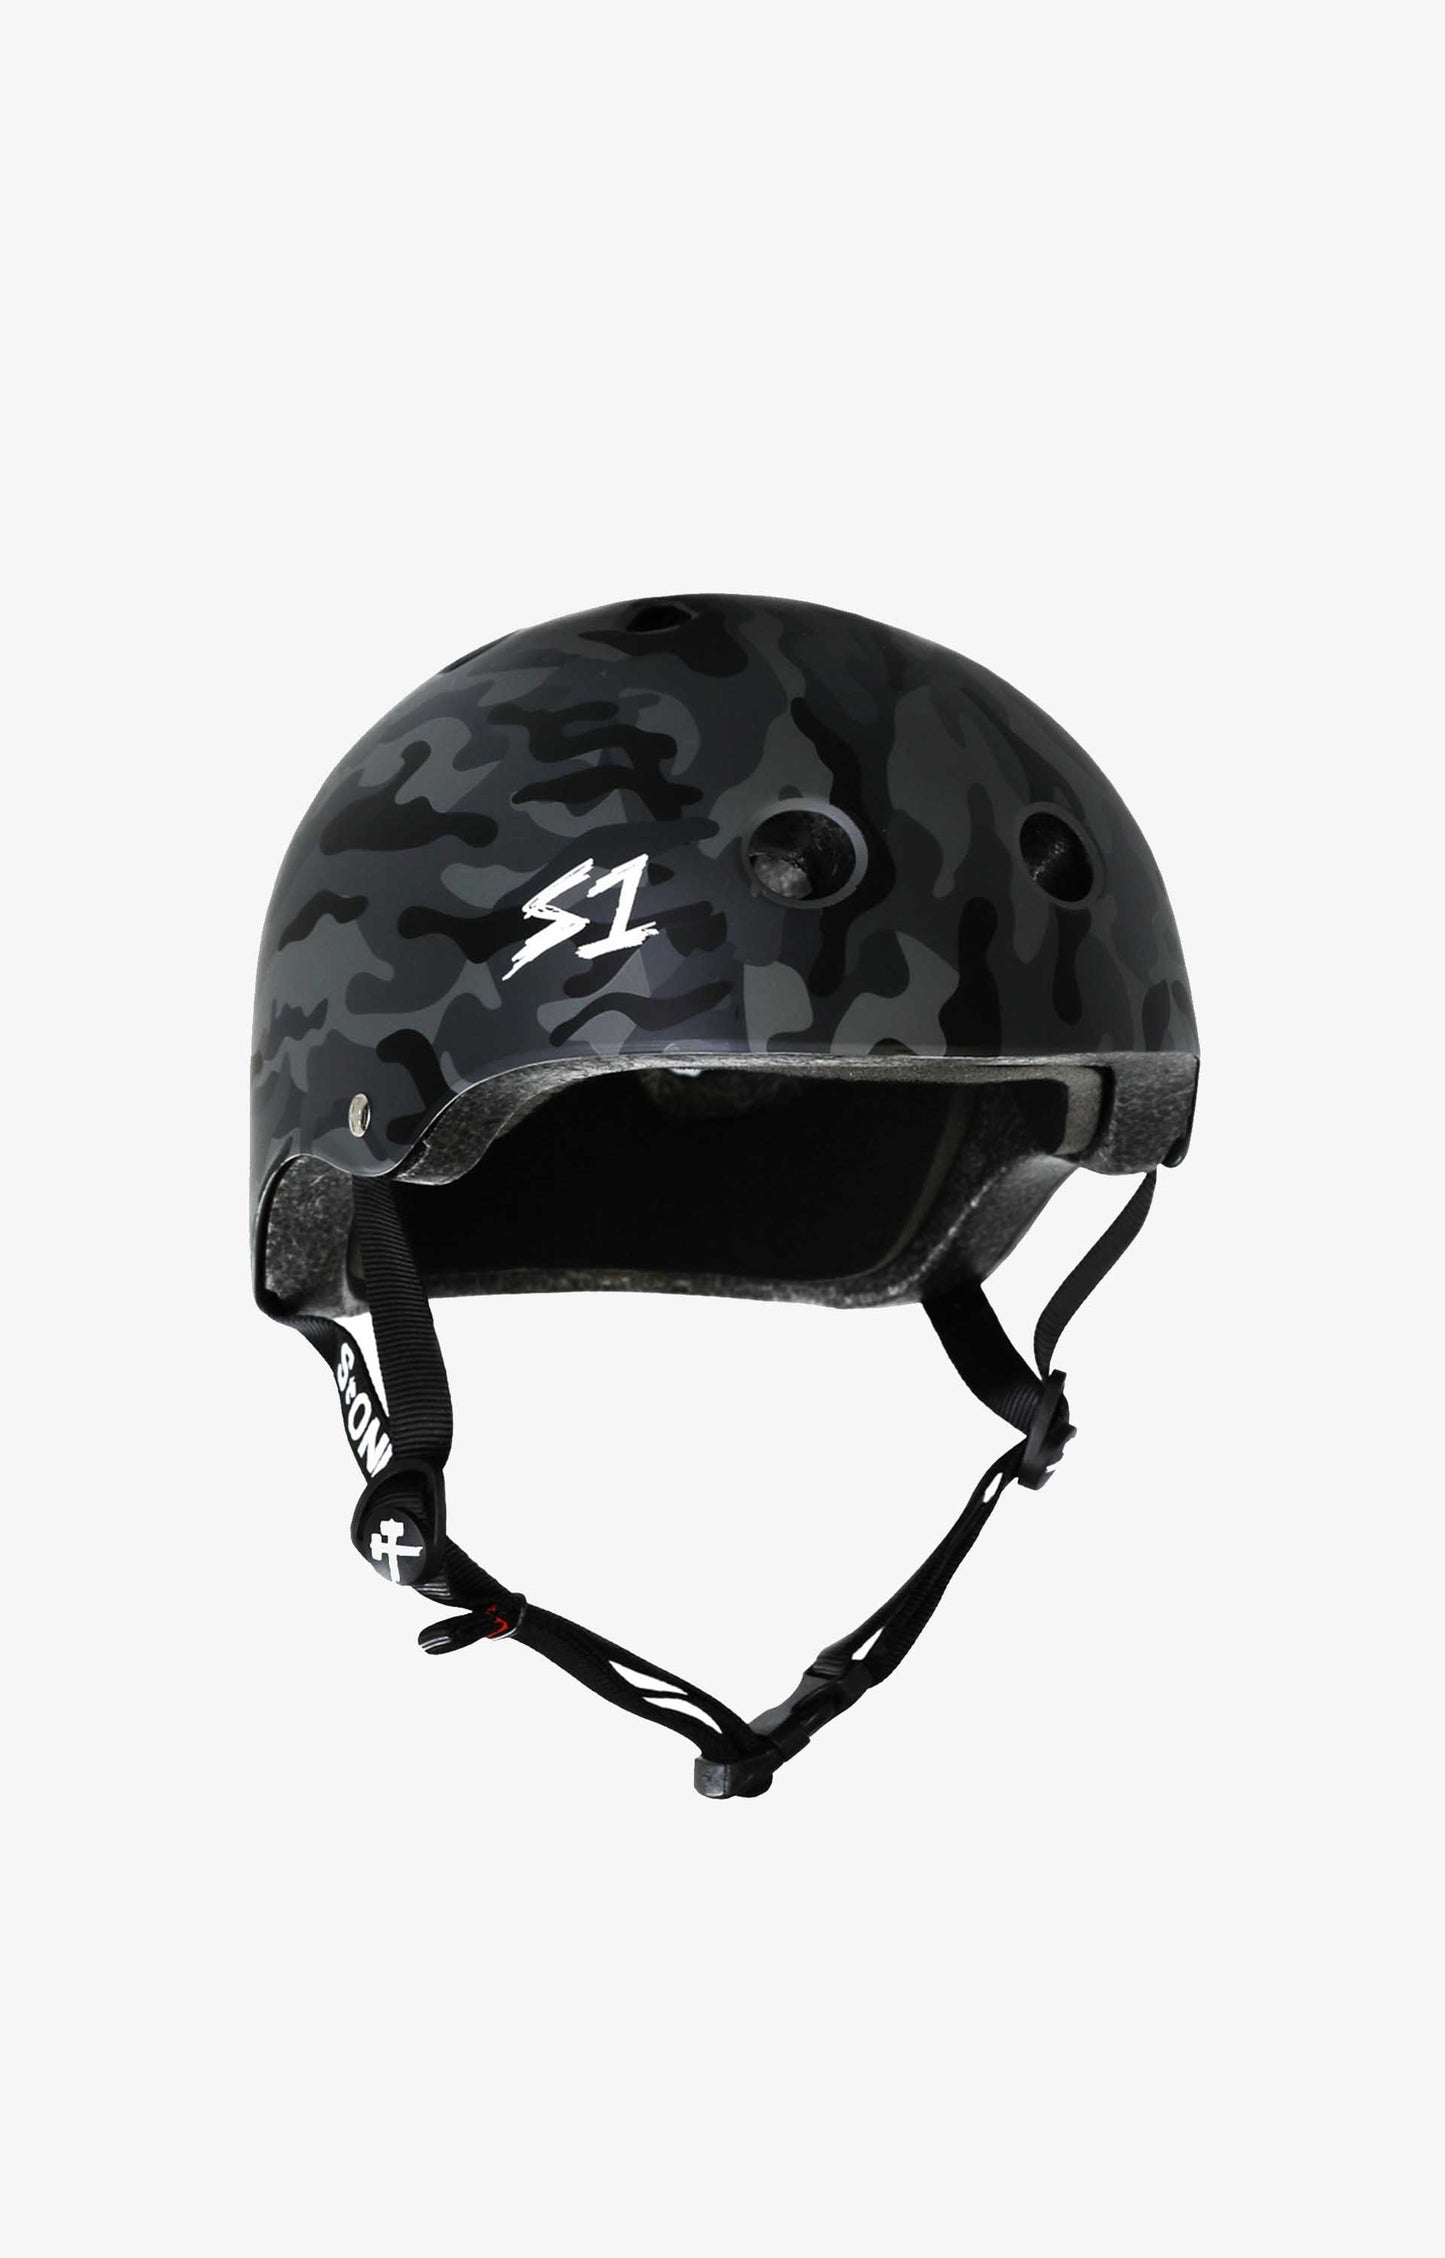 S-One Lifer Series Helmet, Black Camo